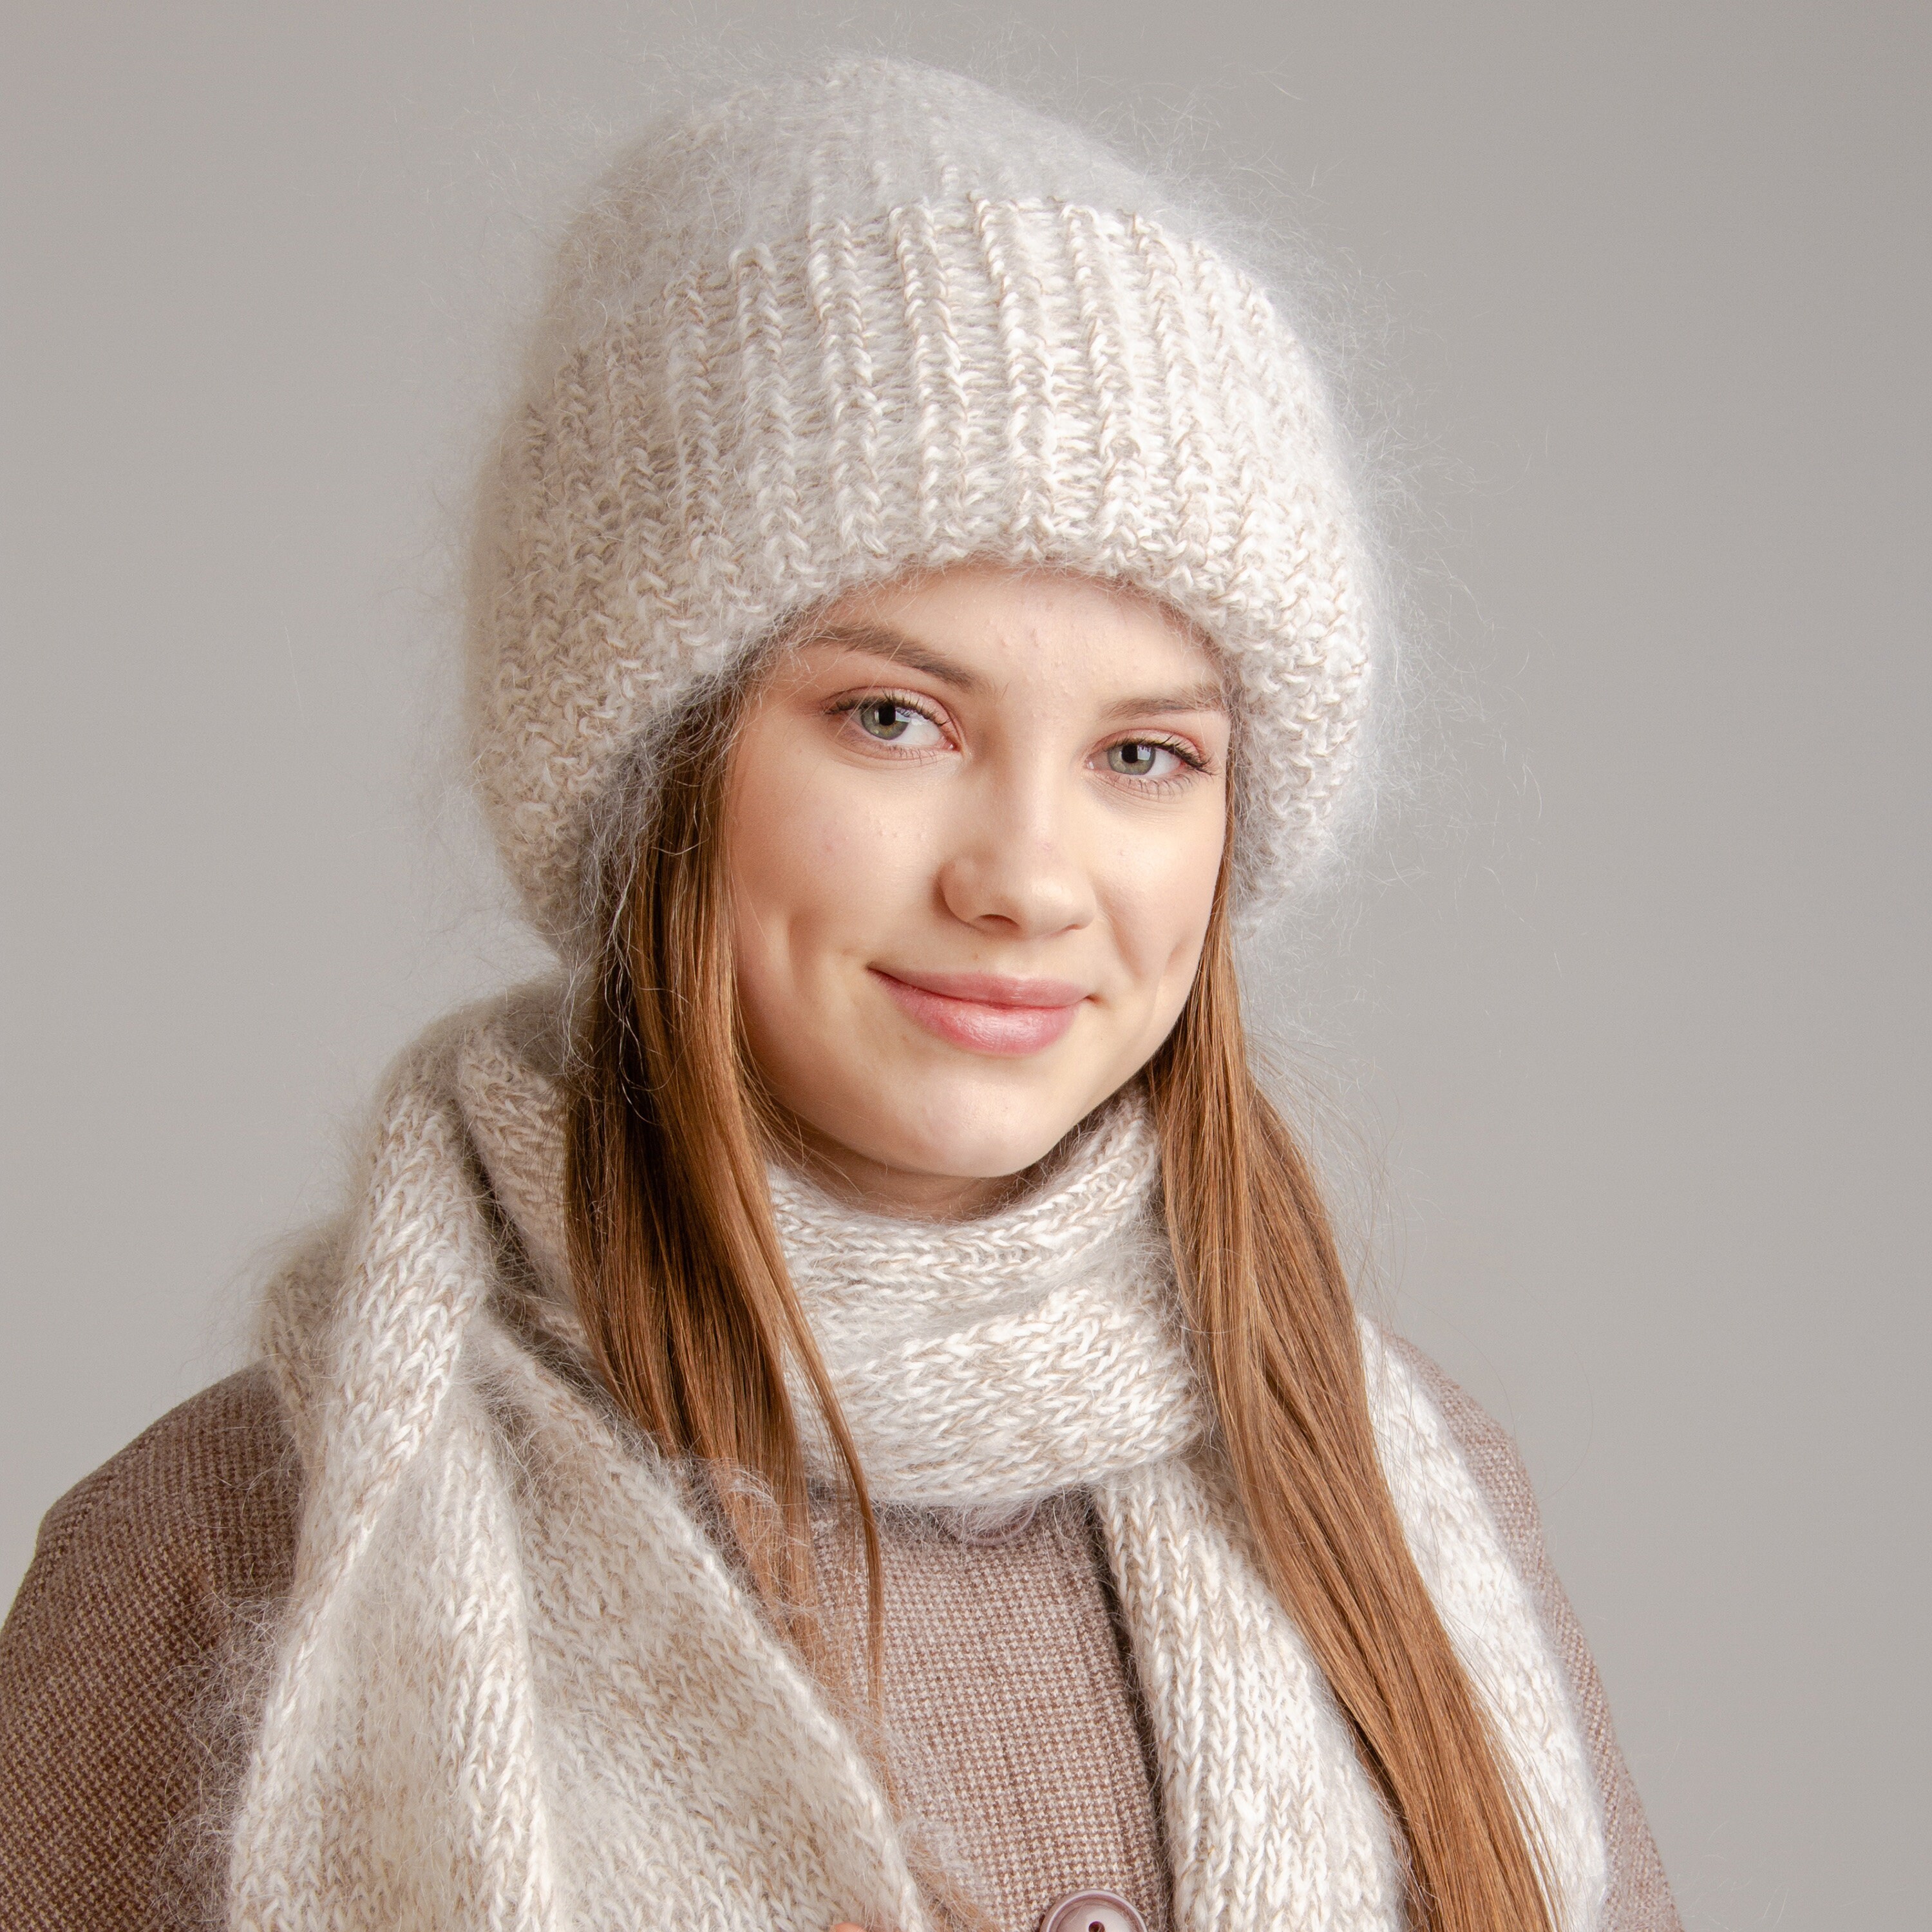 LITZEE Women Knitted Hat Scarf Set Winter Warm Thicken Crochet Bobble Pom  Pom Beanie Hat Cap